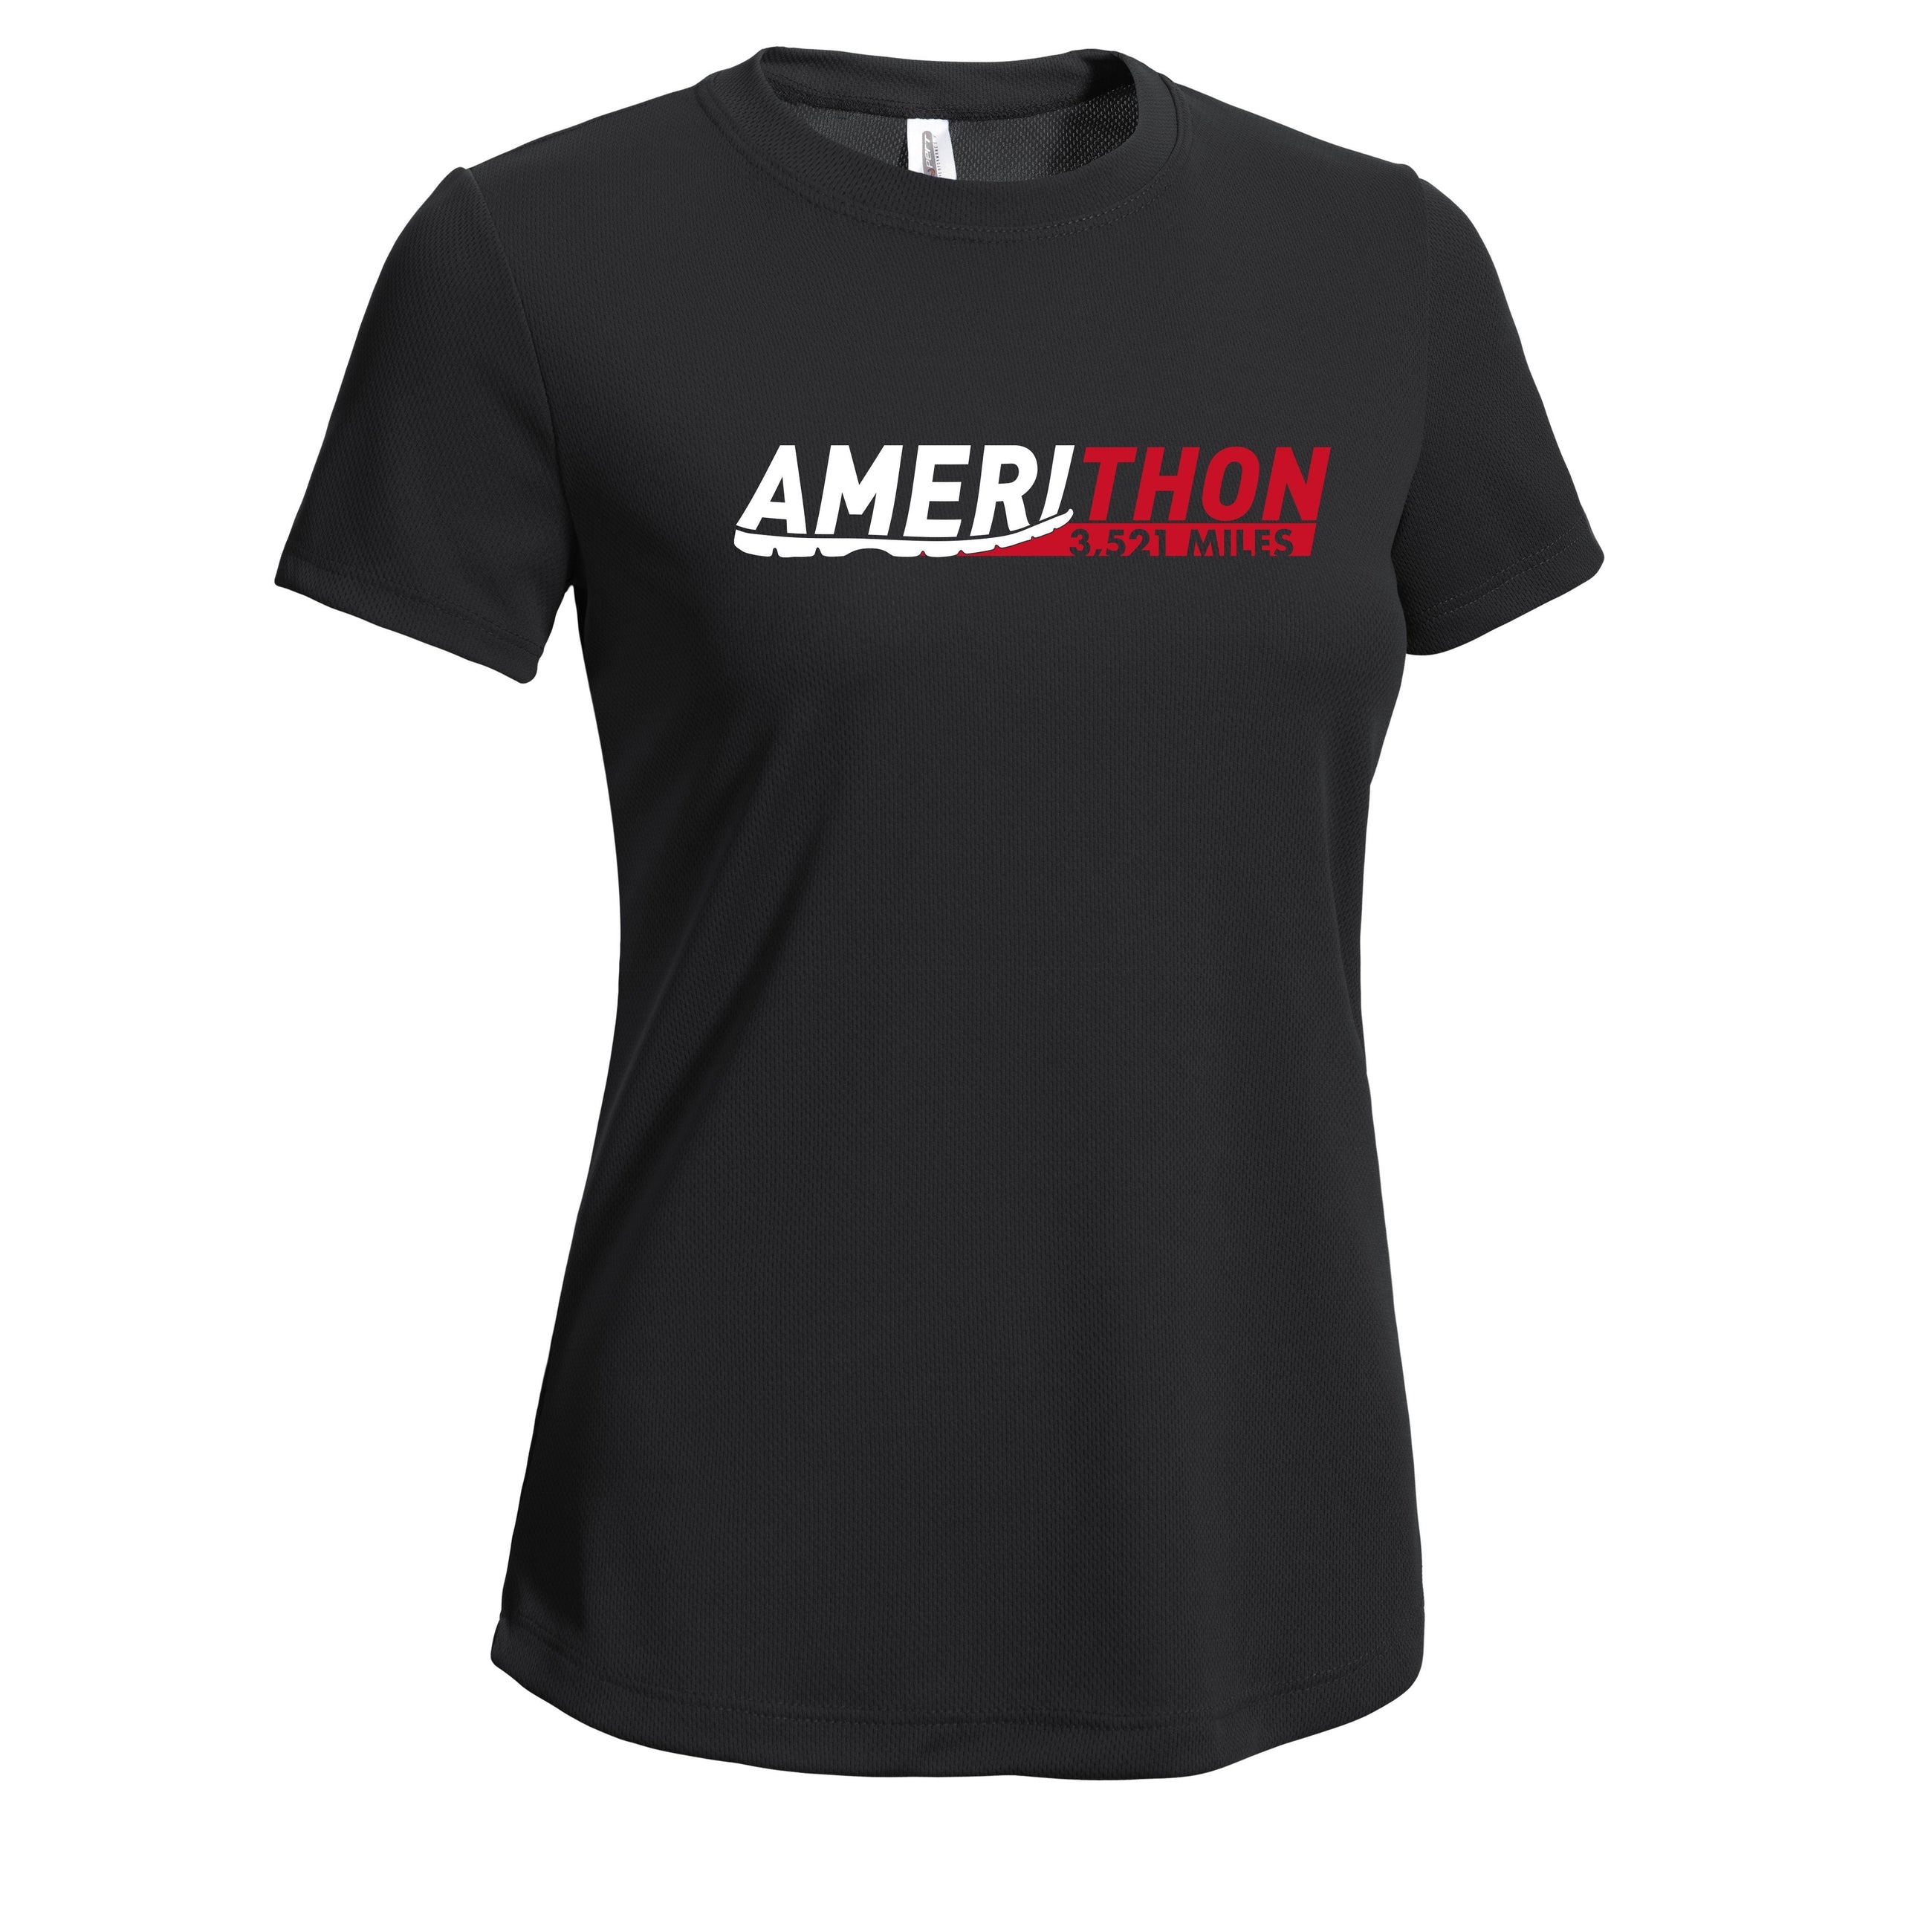 Amerithon Challenge: Get It All Registration – Run The Edge®